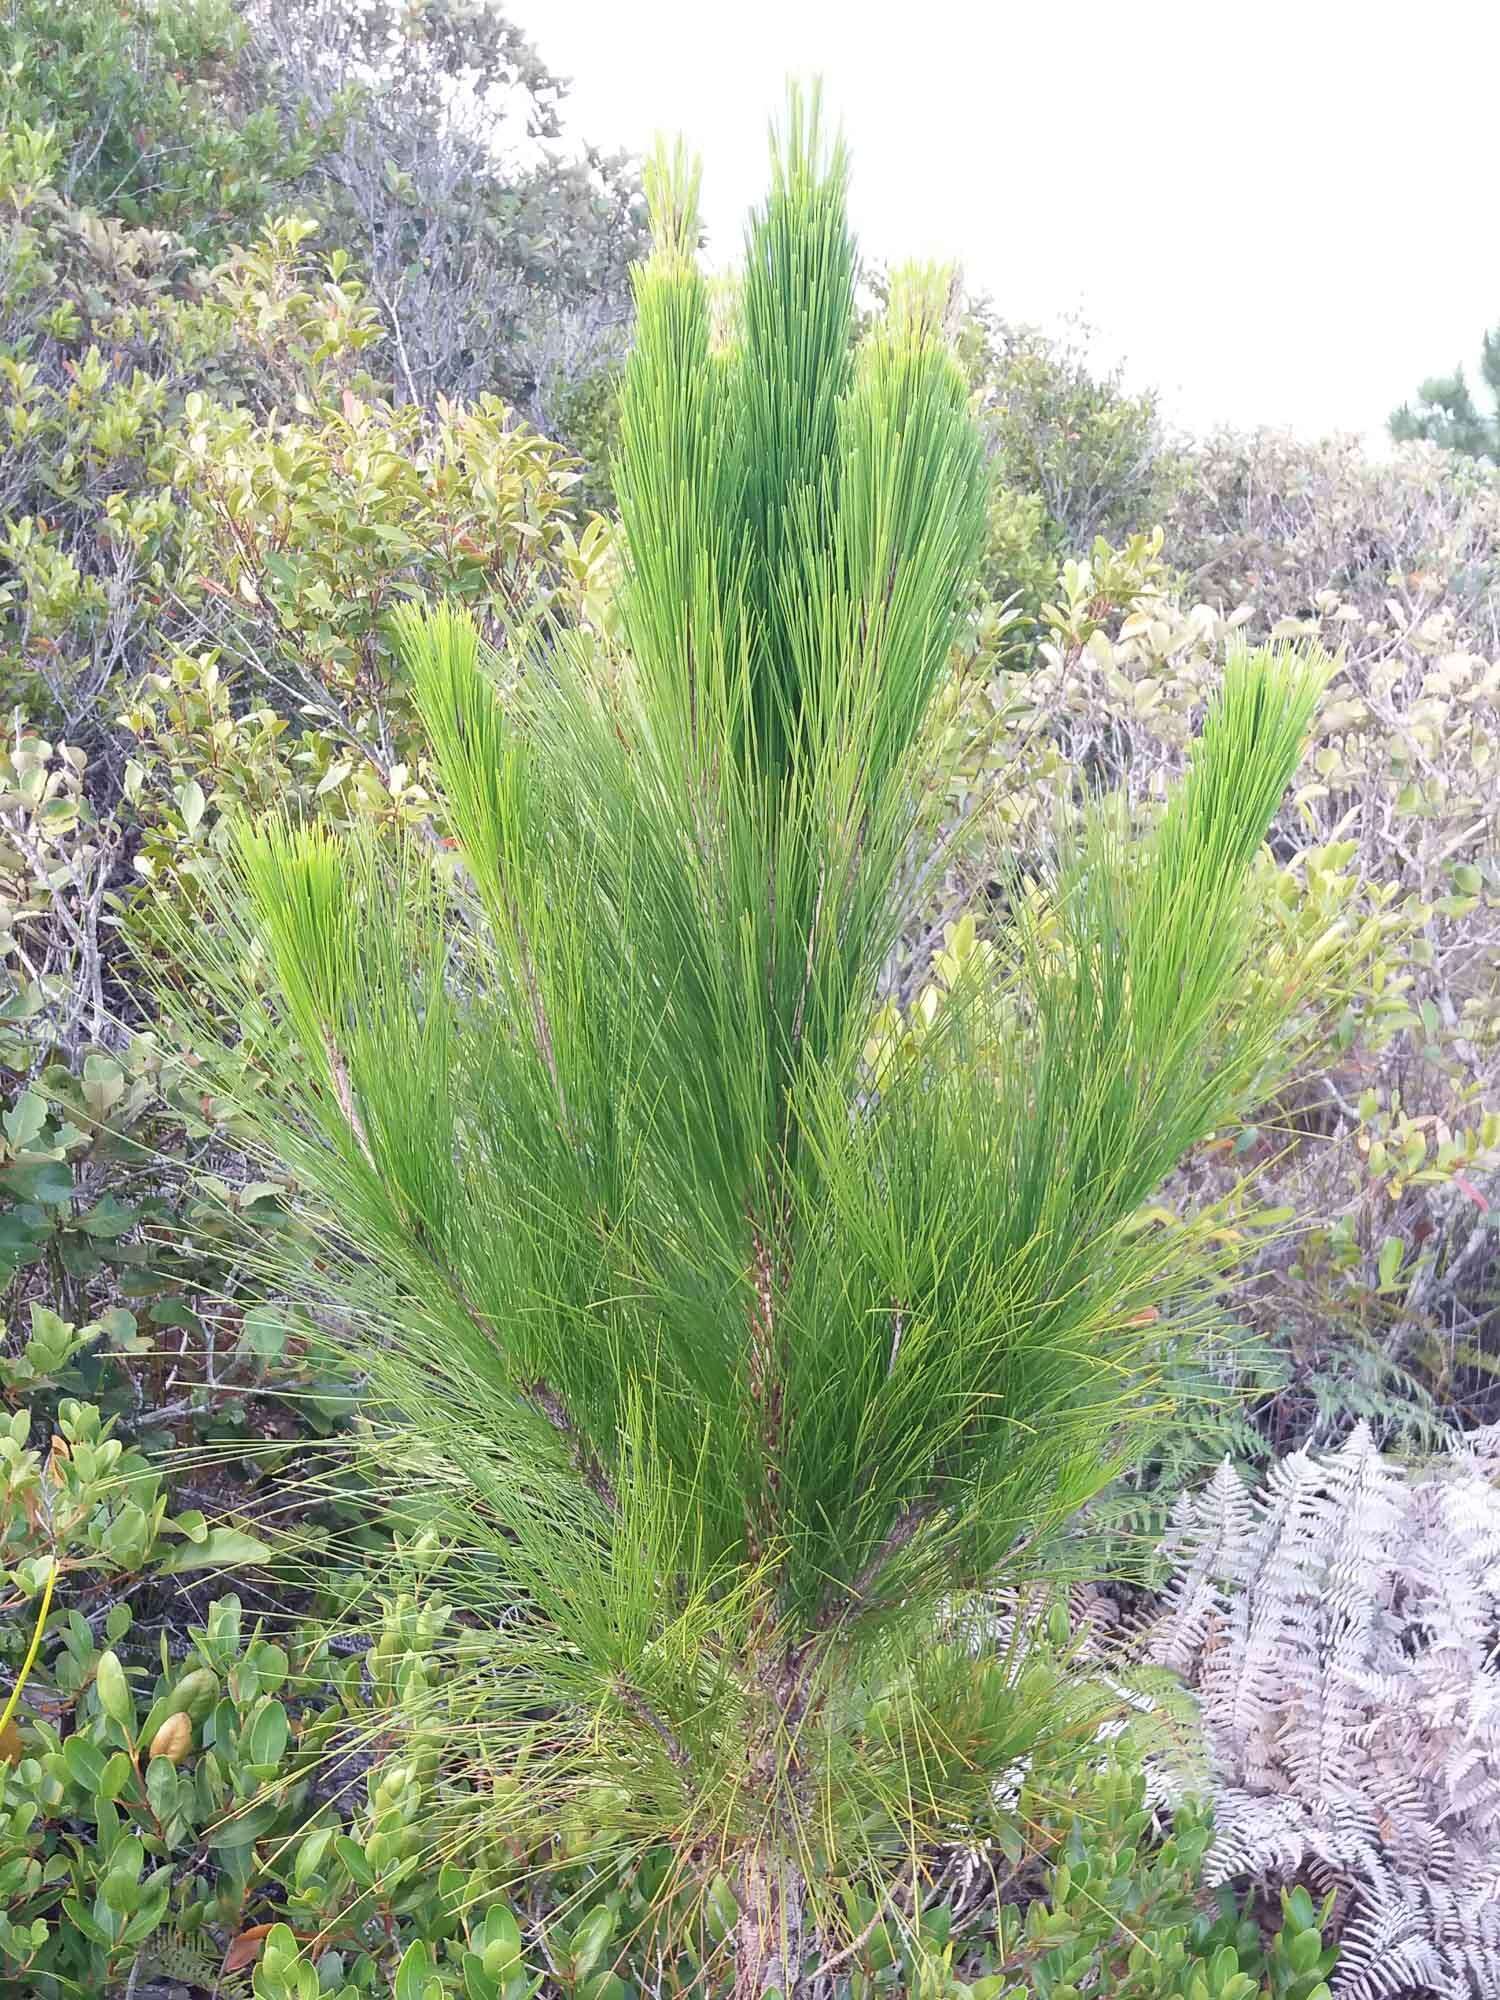 Image of Caribbean Pine